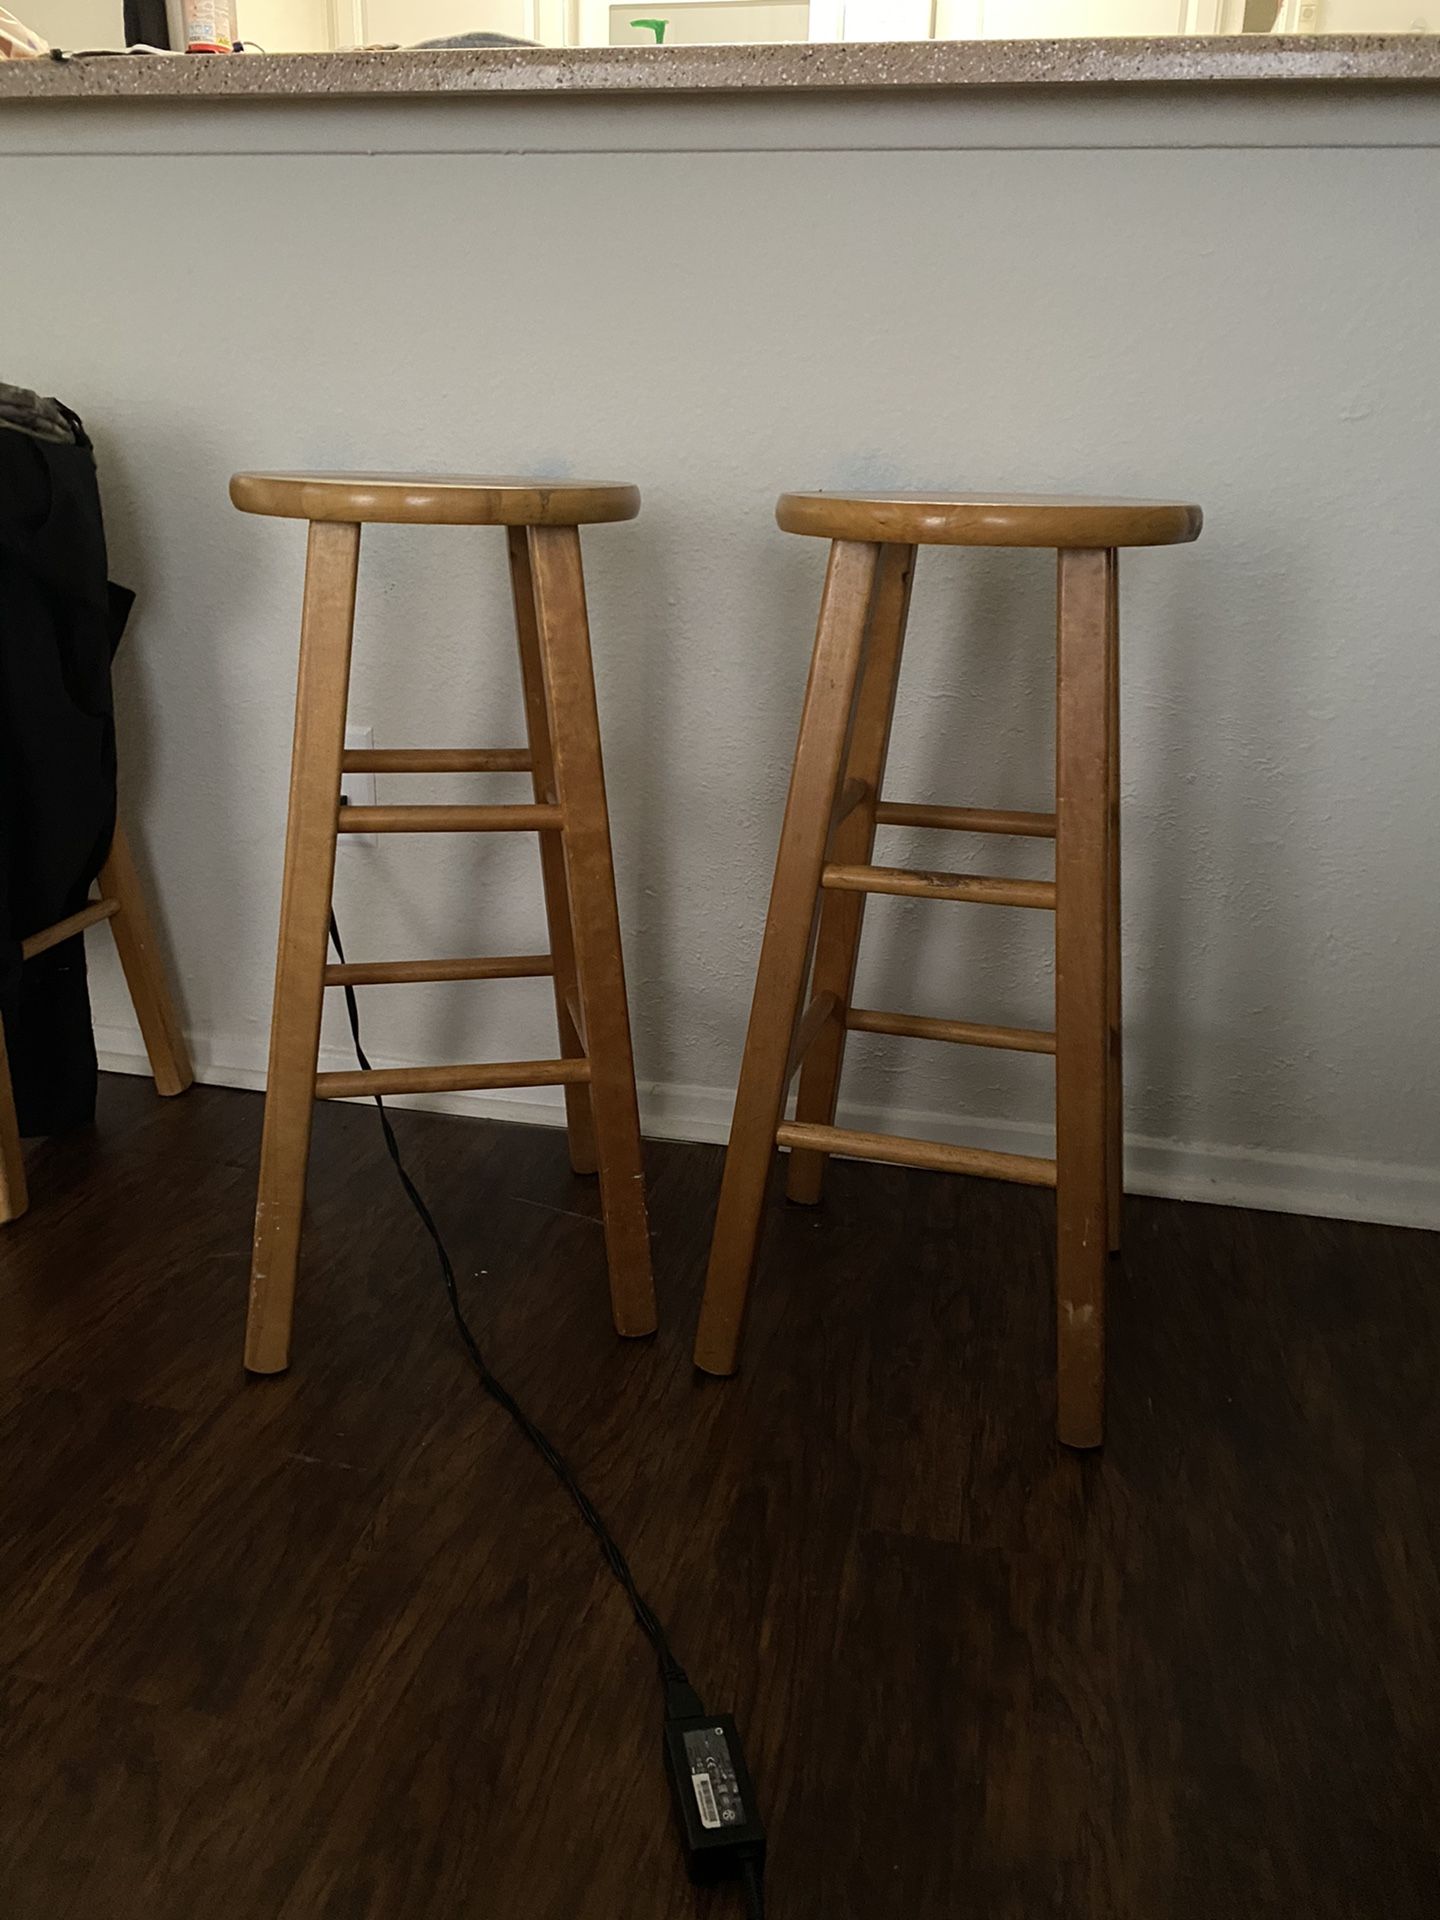 3 wooden stools